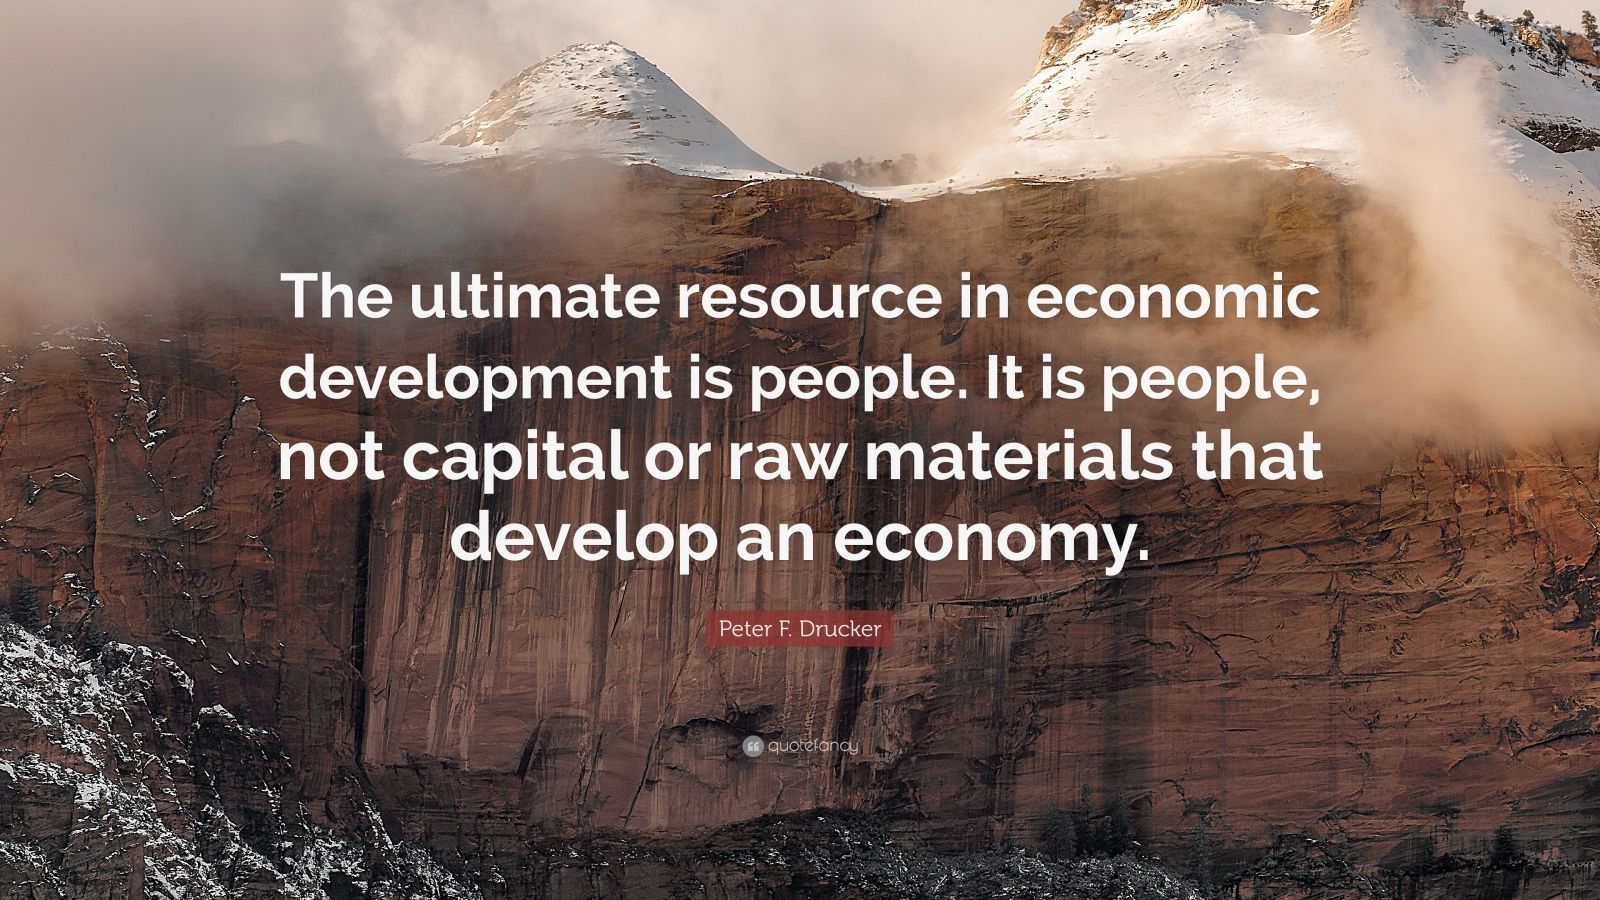 Peter F. Drucker Quote: “The ultimate resource in economic development